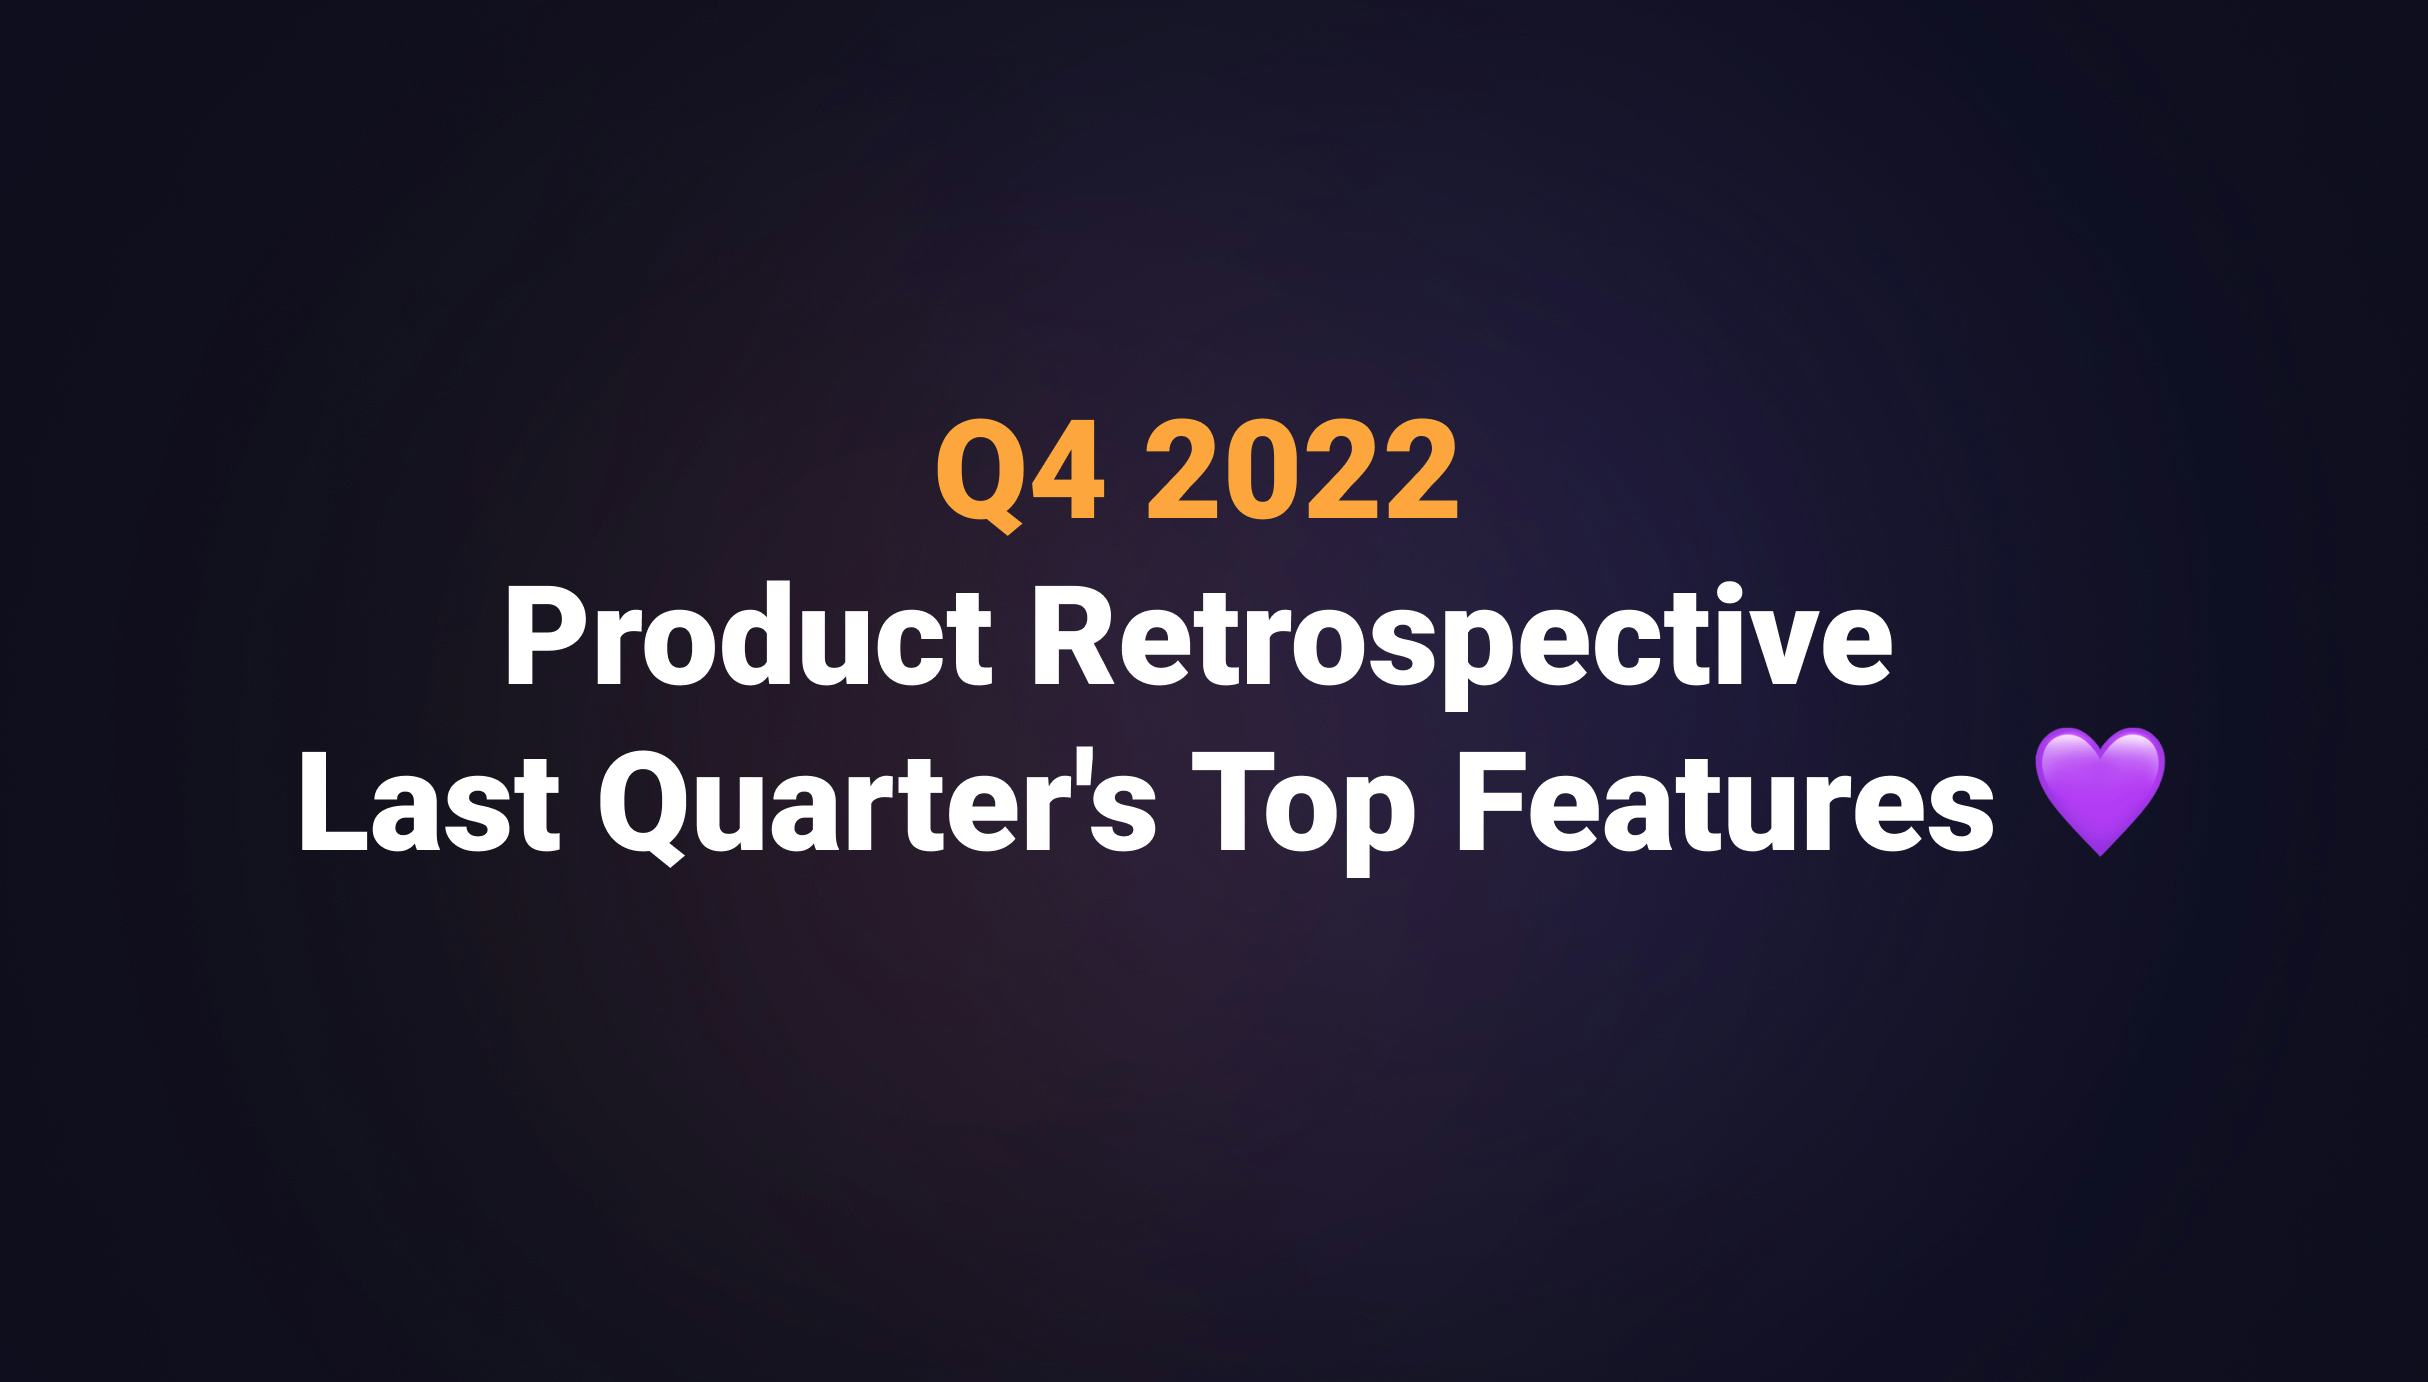 Q4 2022 Product Retrospective - Last Quarter's Top Features